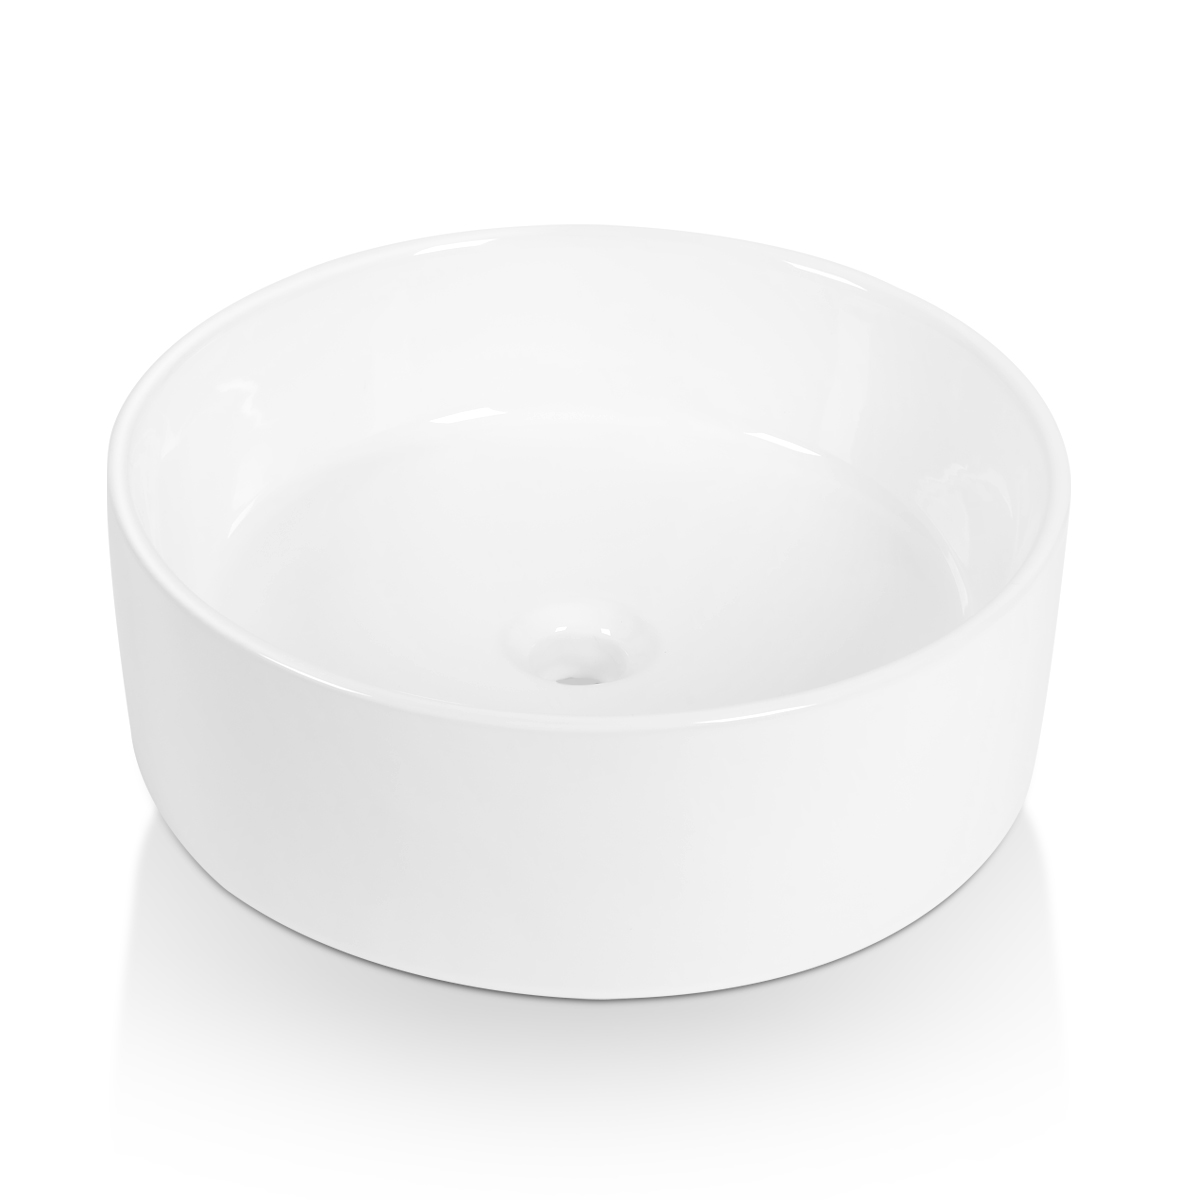 BVS1818A-OL 18" x 18" White Oval Ceramic Countertop Bathroom Vanity Vessel Sink